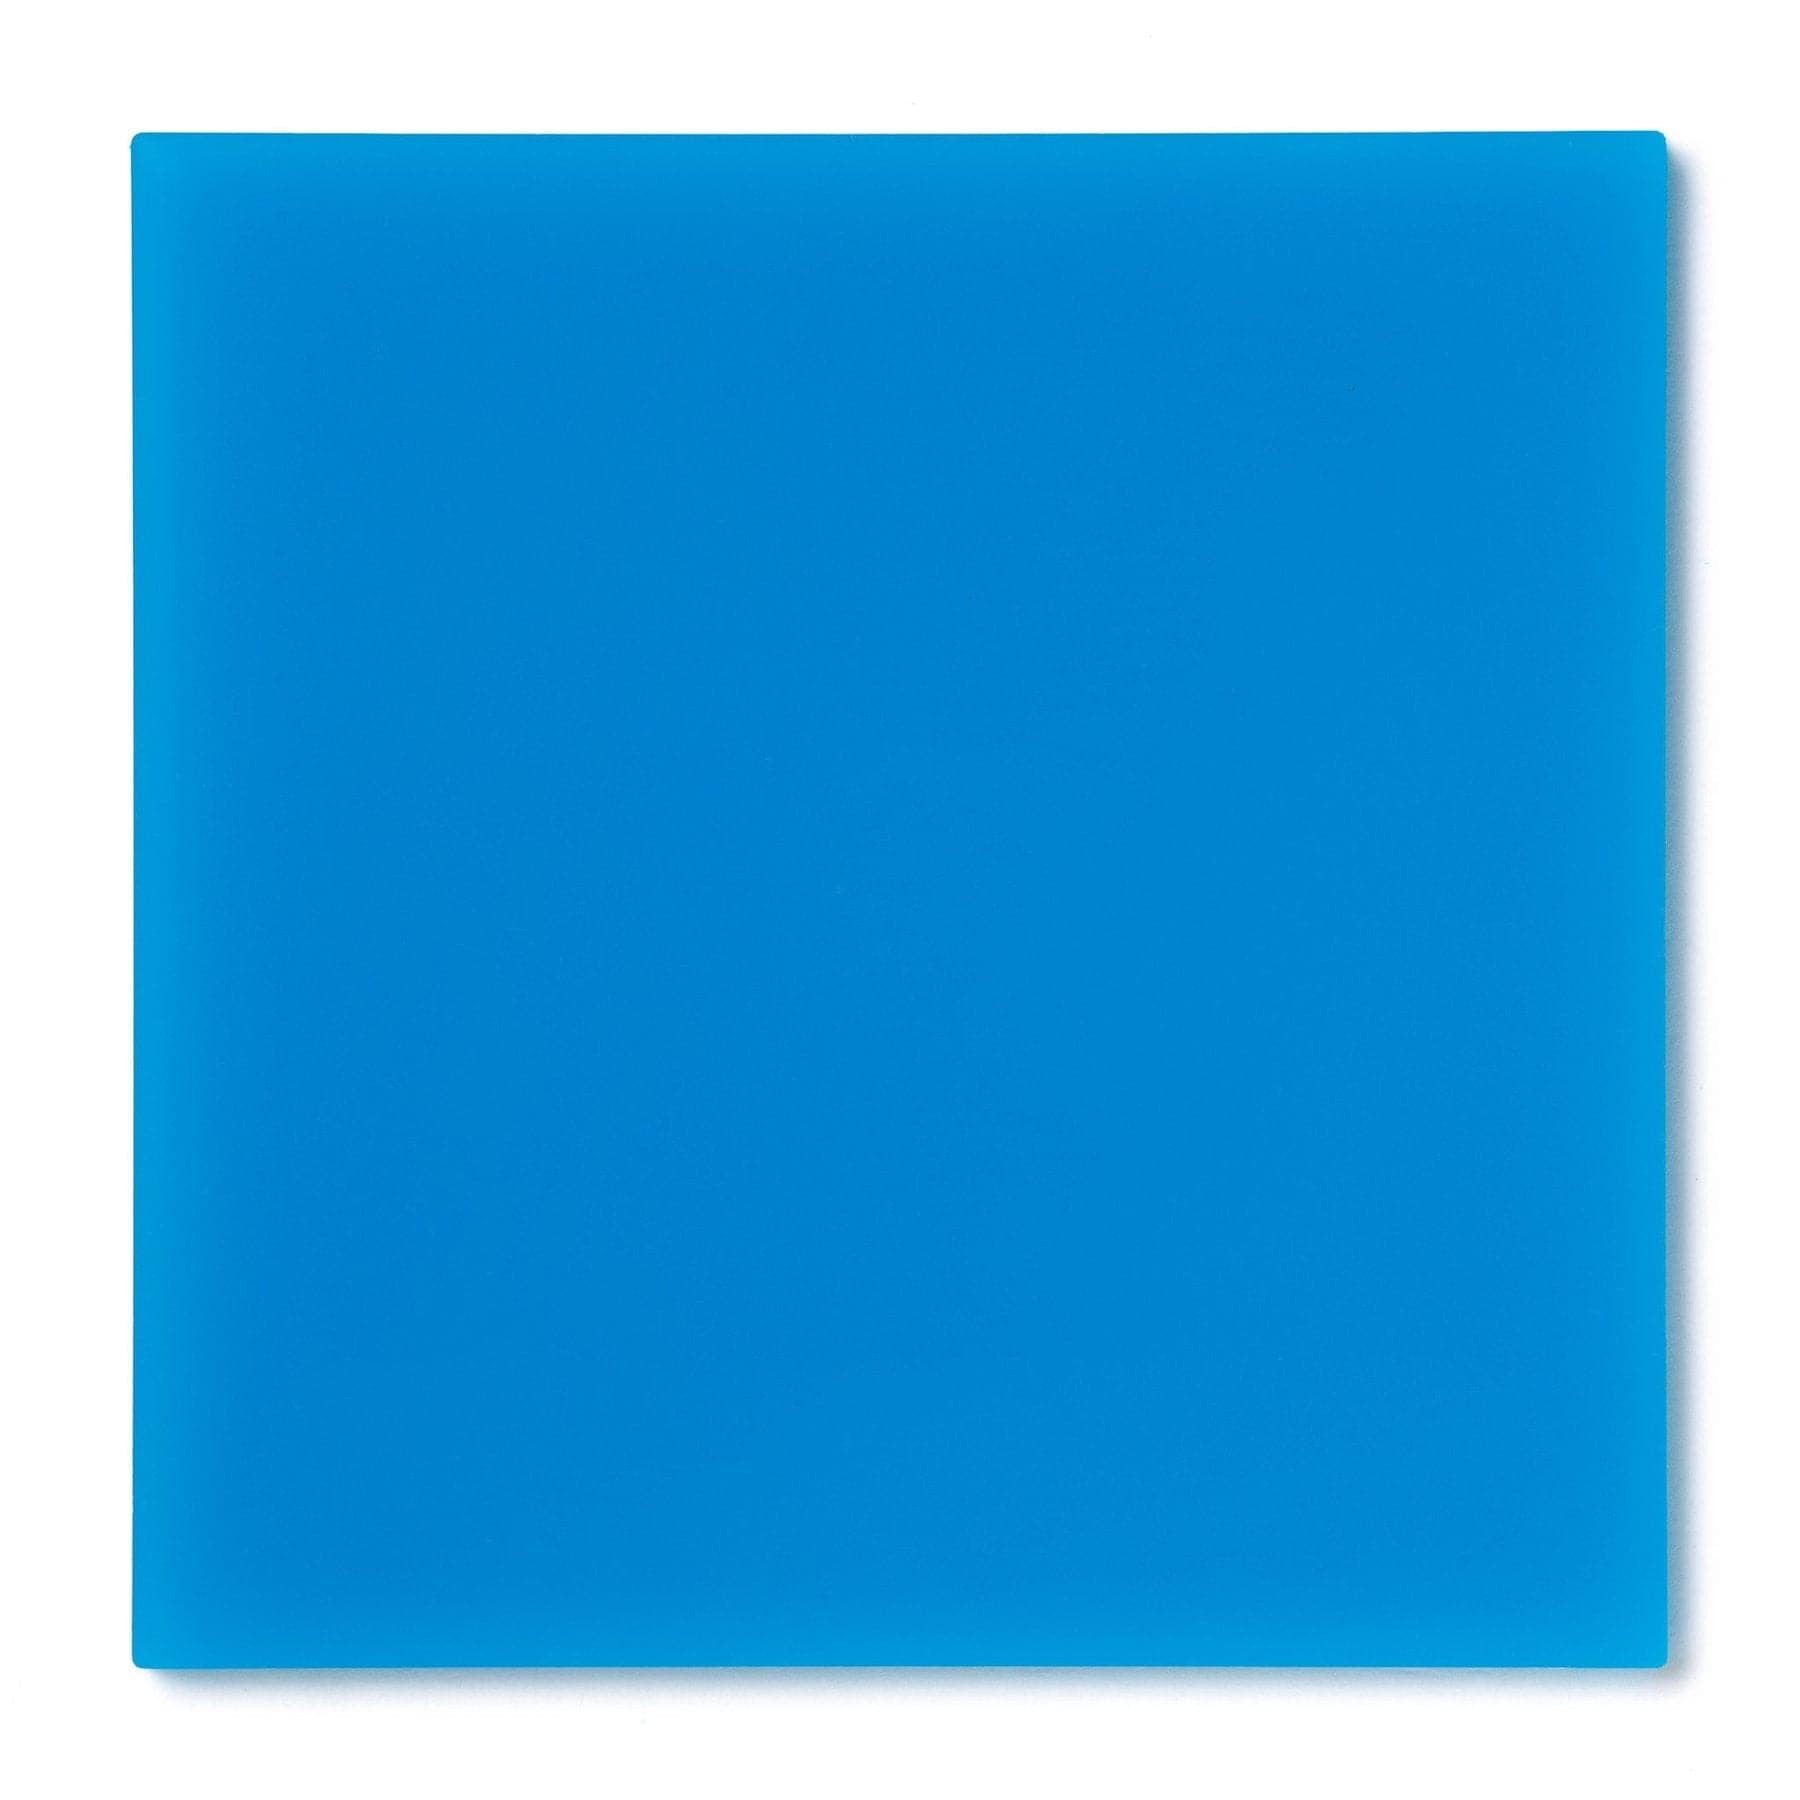 Acrylic Sheet 1/8" Light Blue Translucent #2051